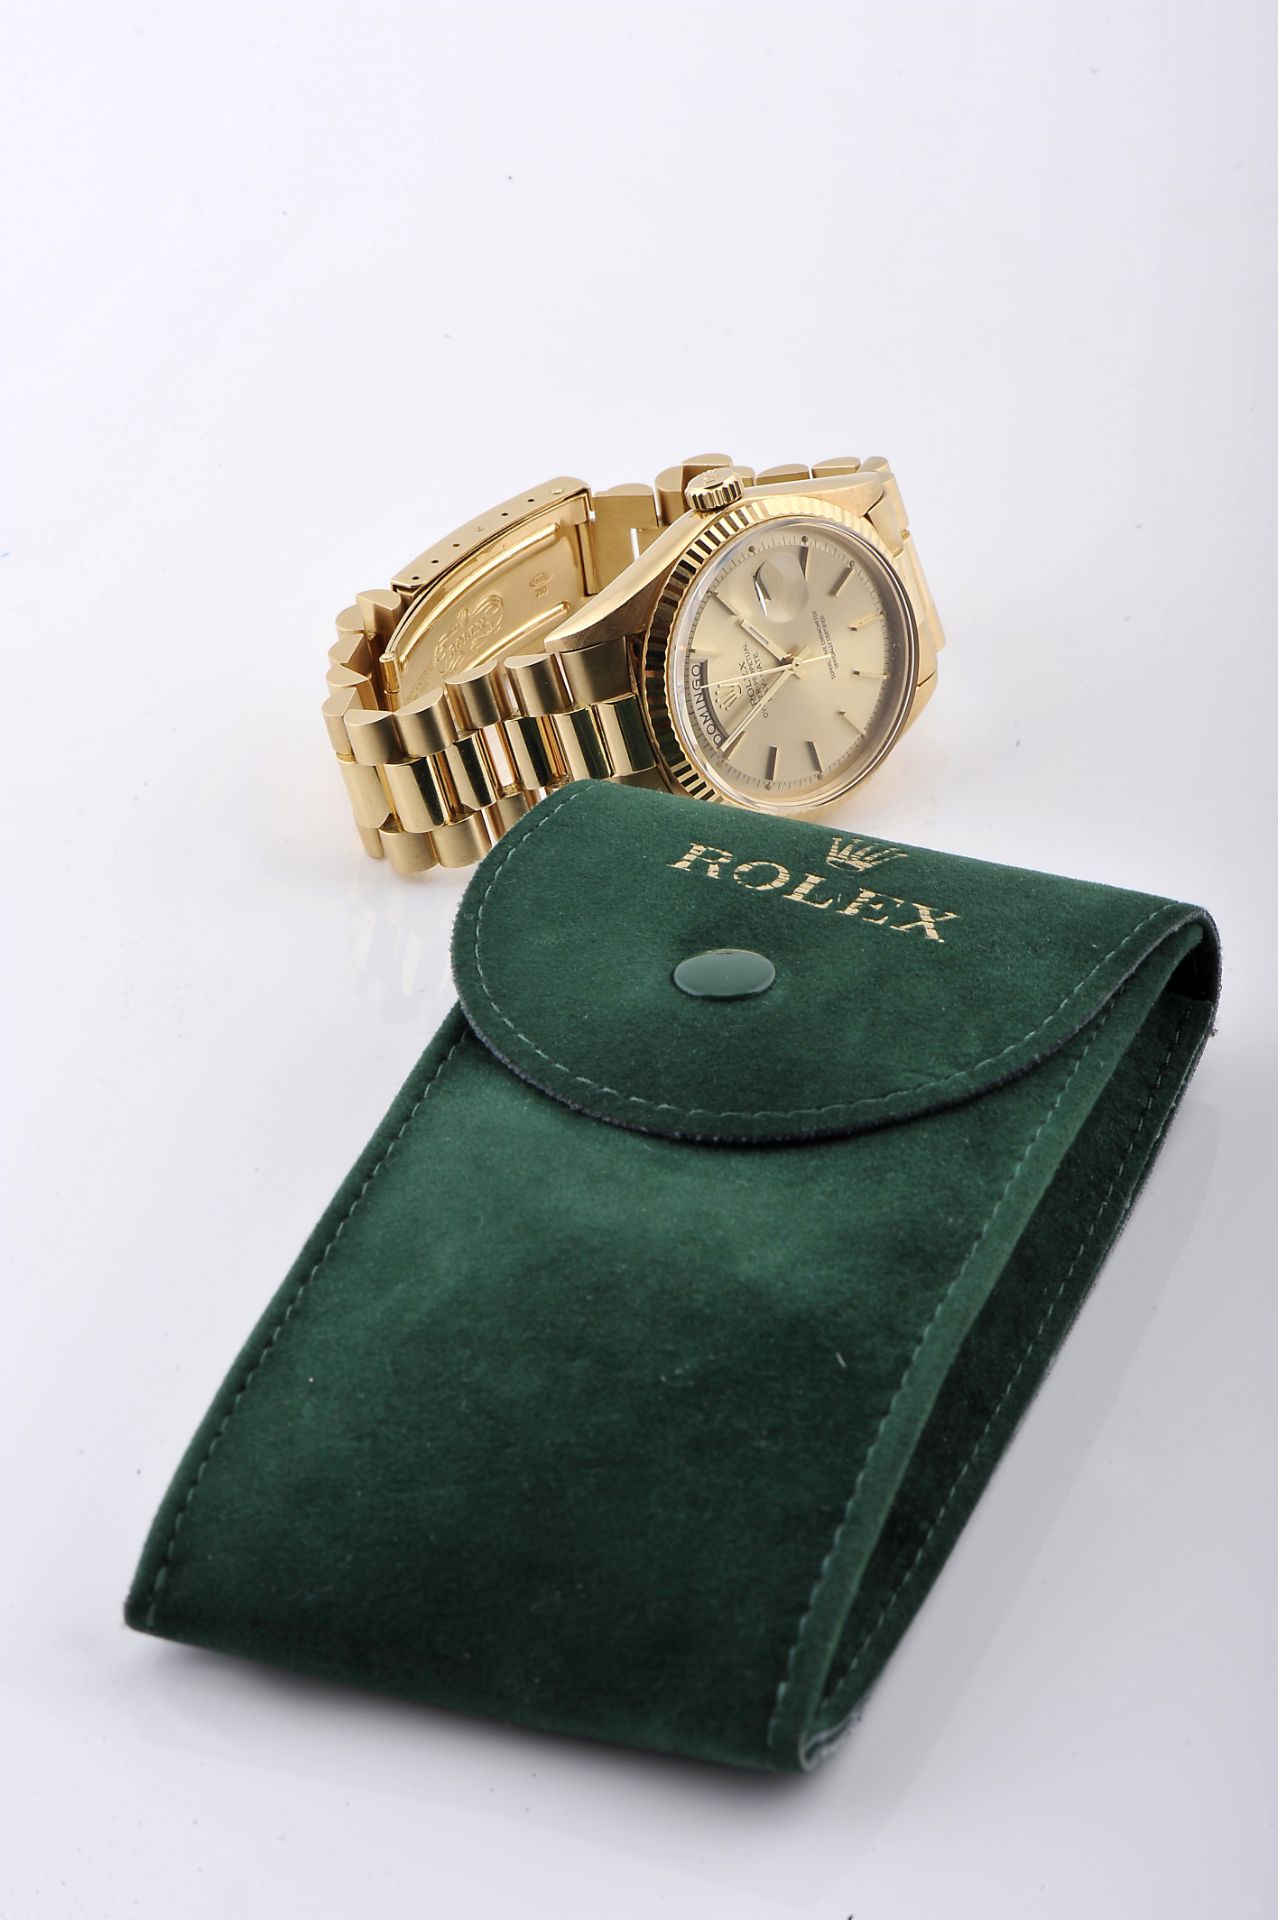 A ROLEX Wrist Watch - Image 2 of 3